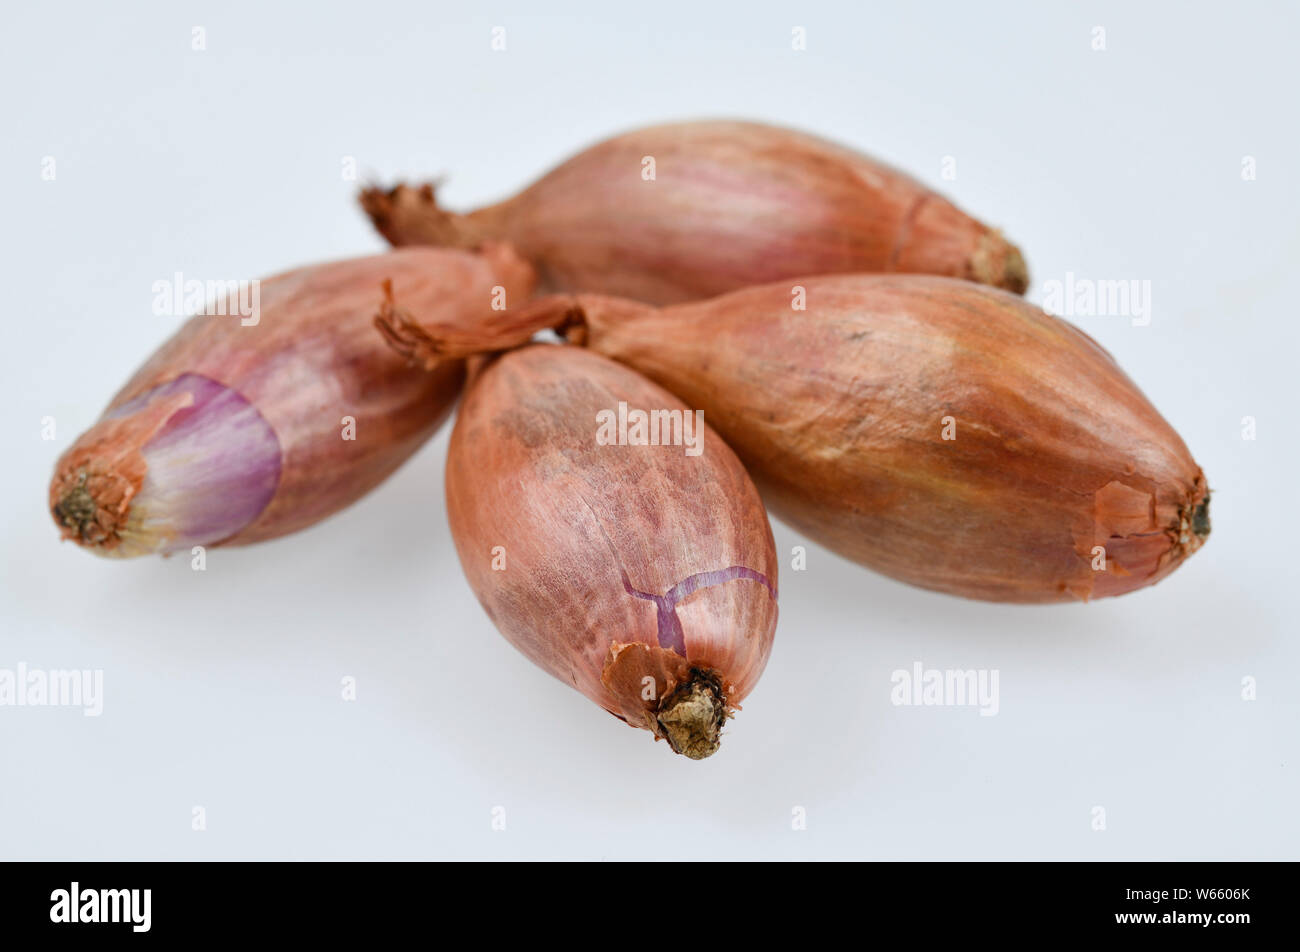 shallots, Allium ascalonicum Stock Photo